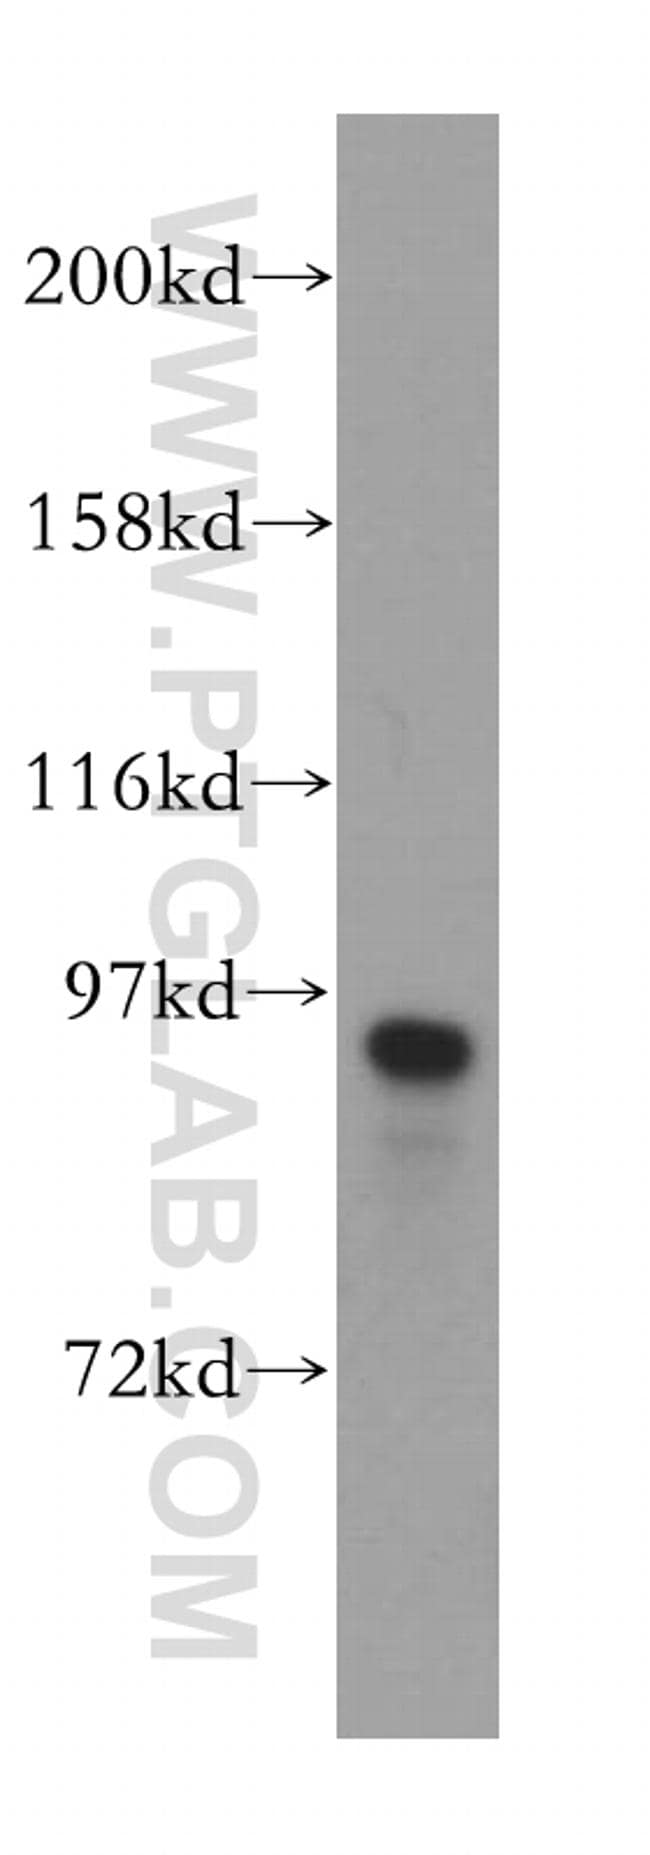 IFT88 Antibody in Western Blot (WB)